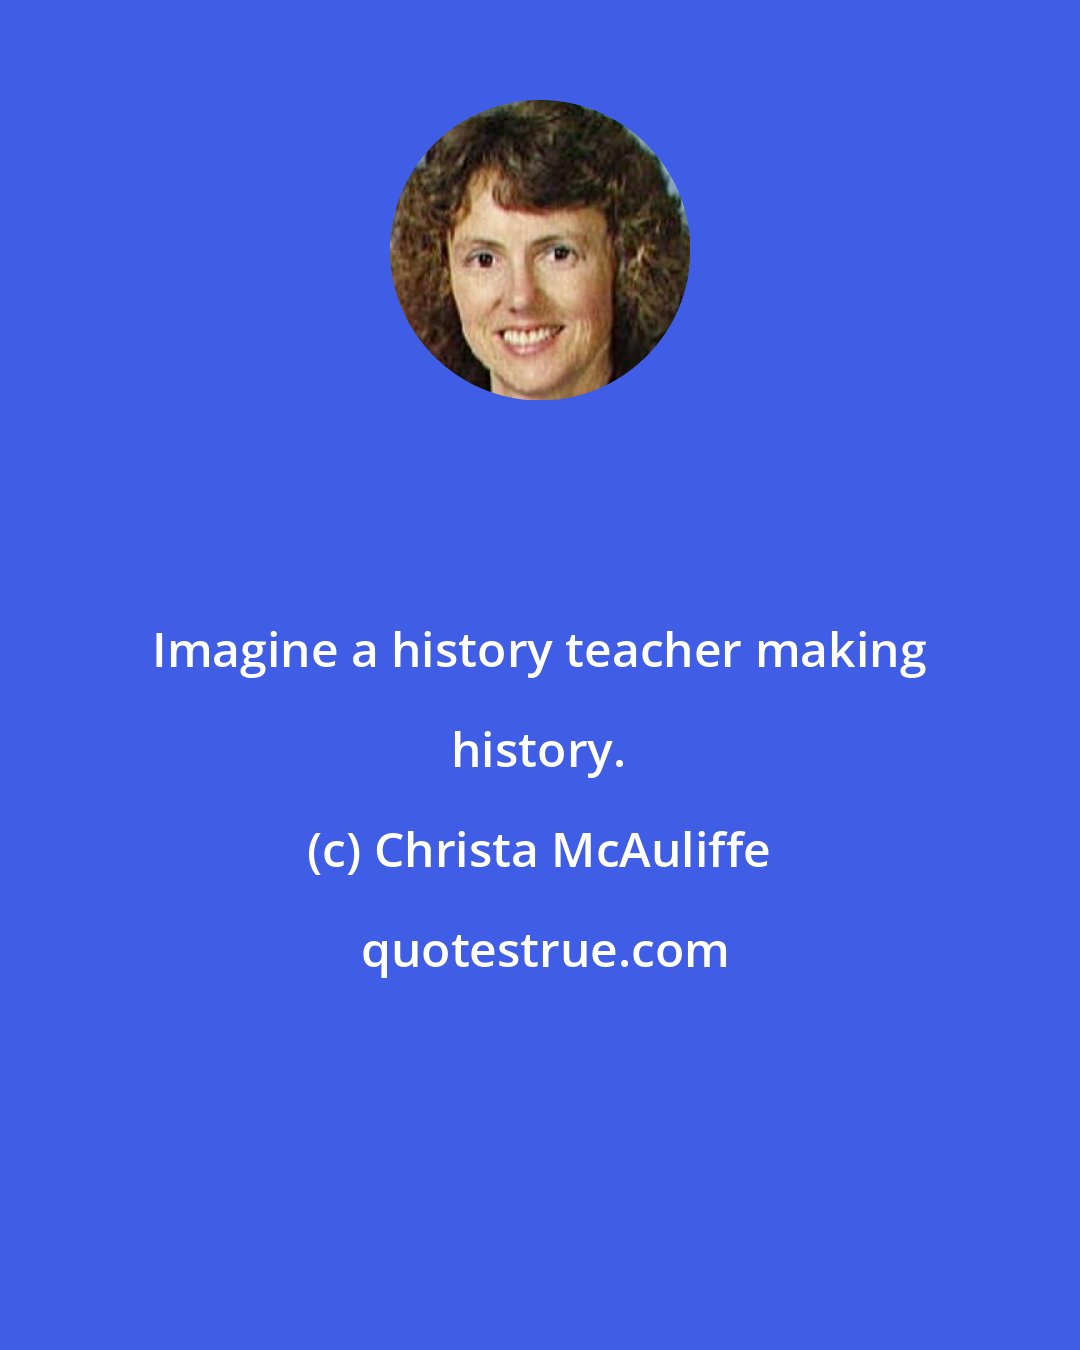 Christa McAuliffe: Imagine a history teacher making history.